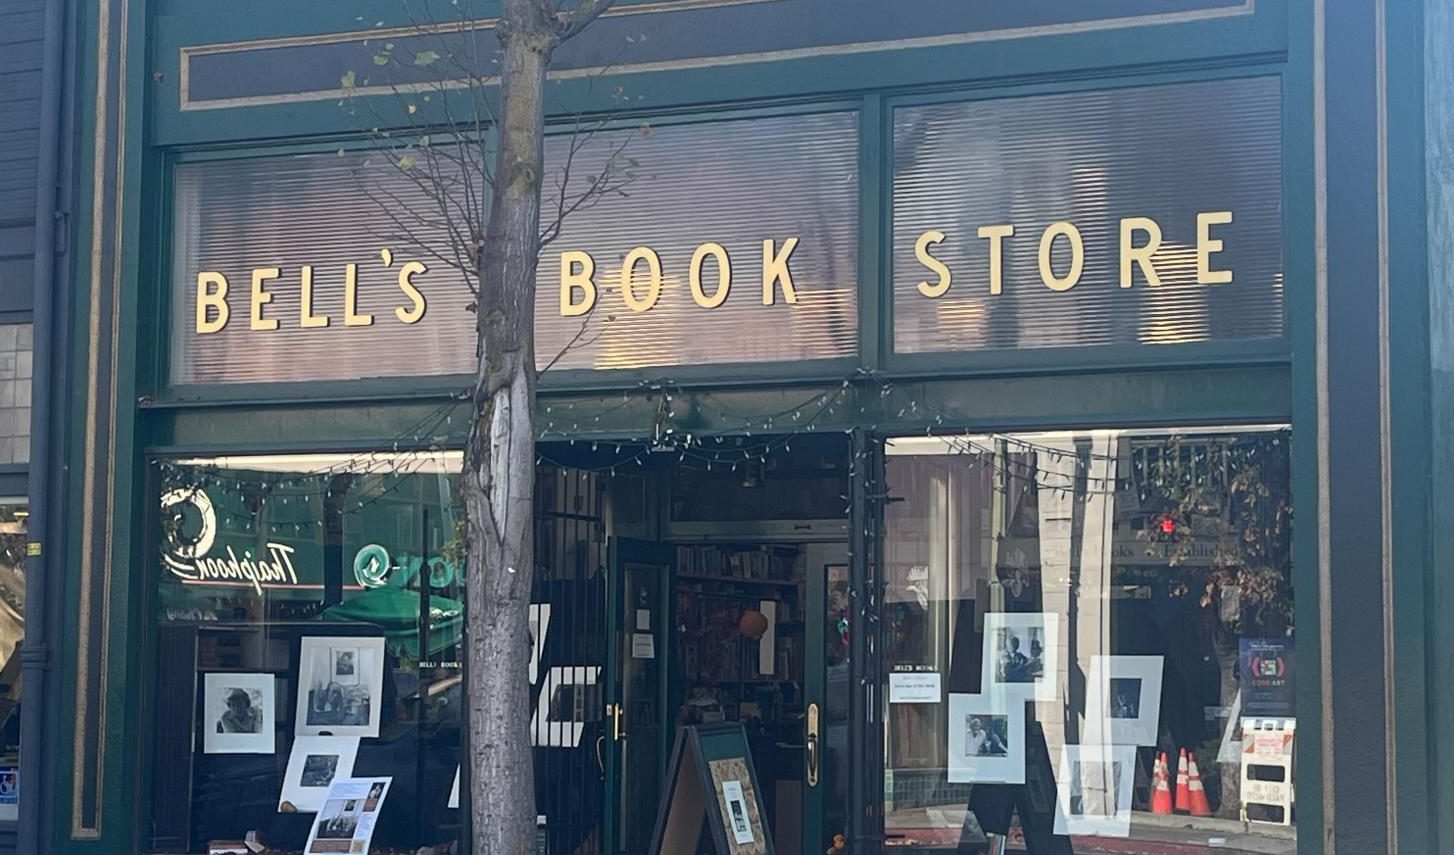 Bell’s Books